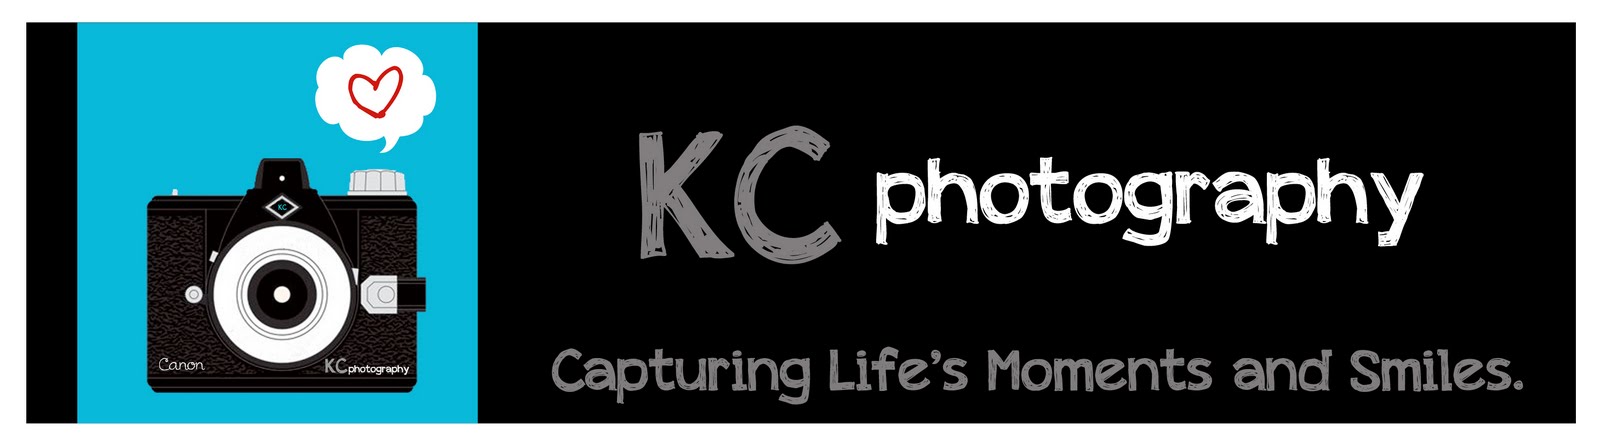 kc photography